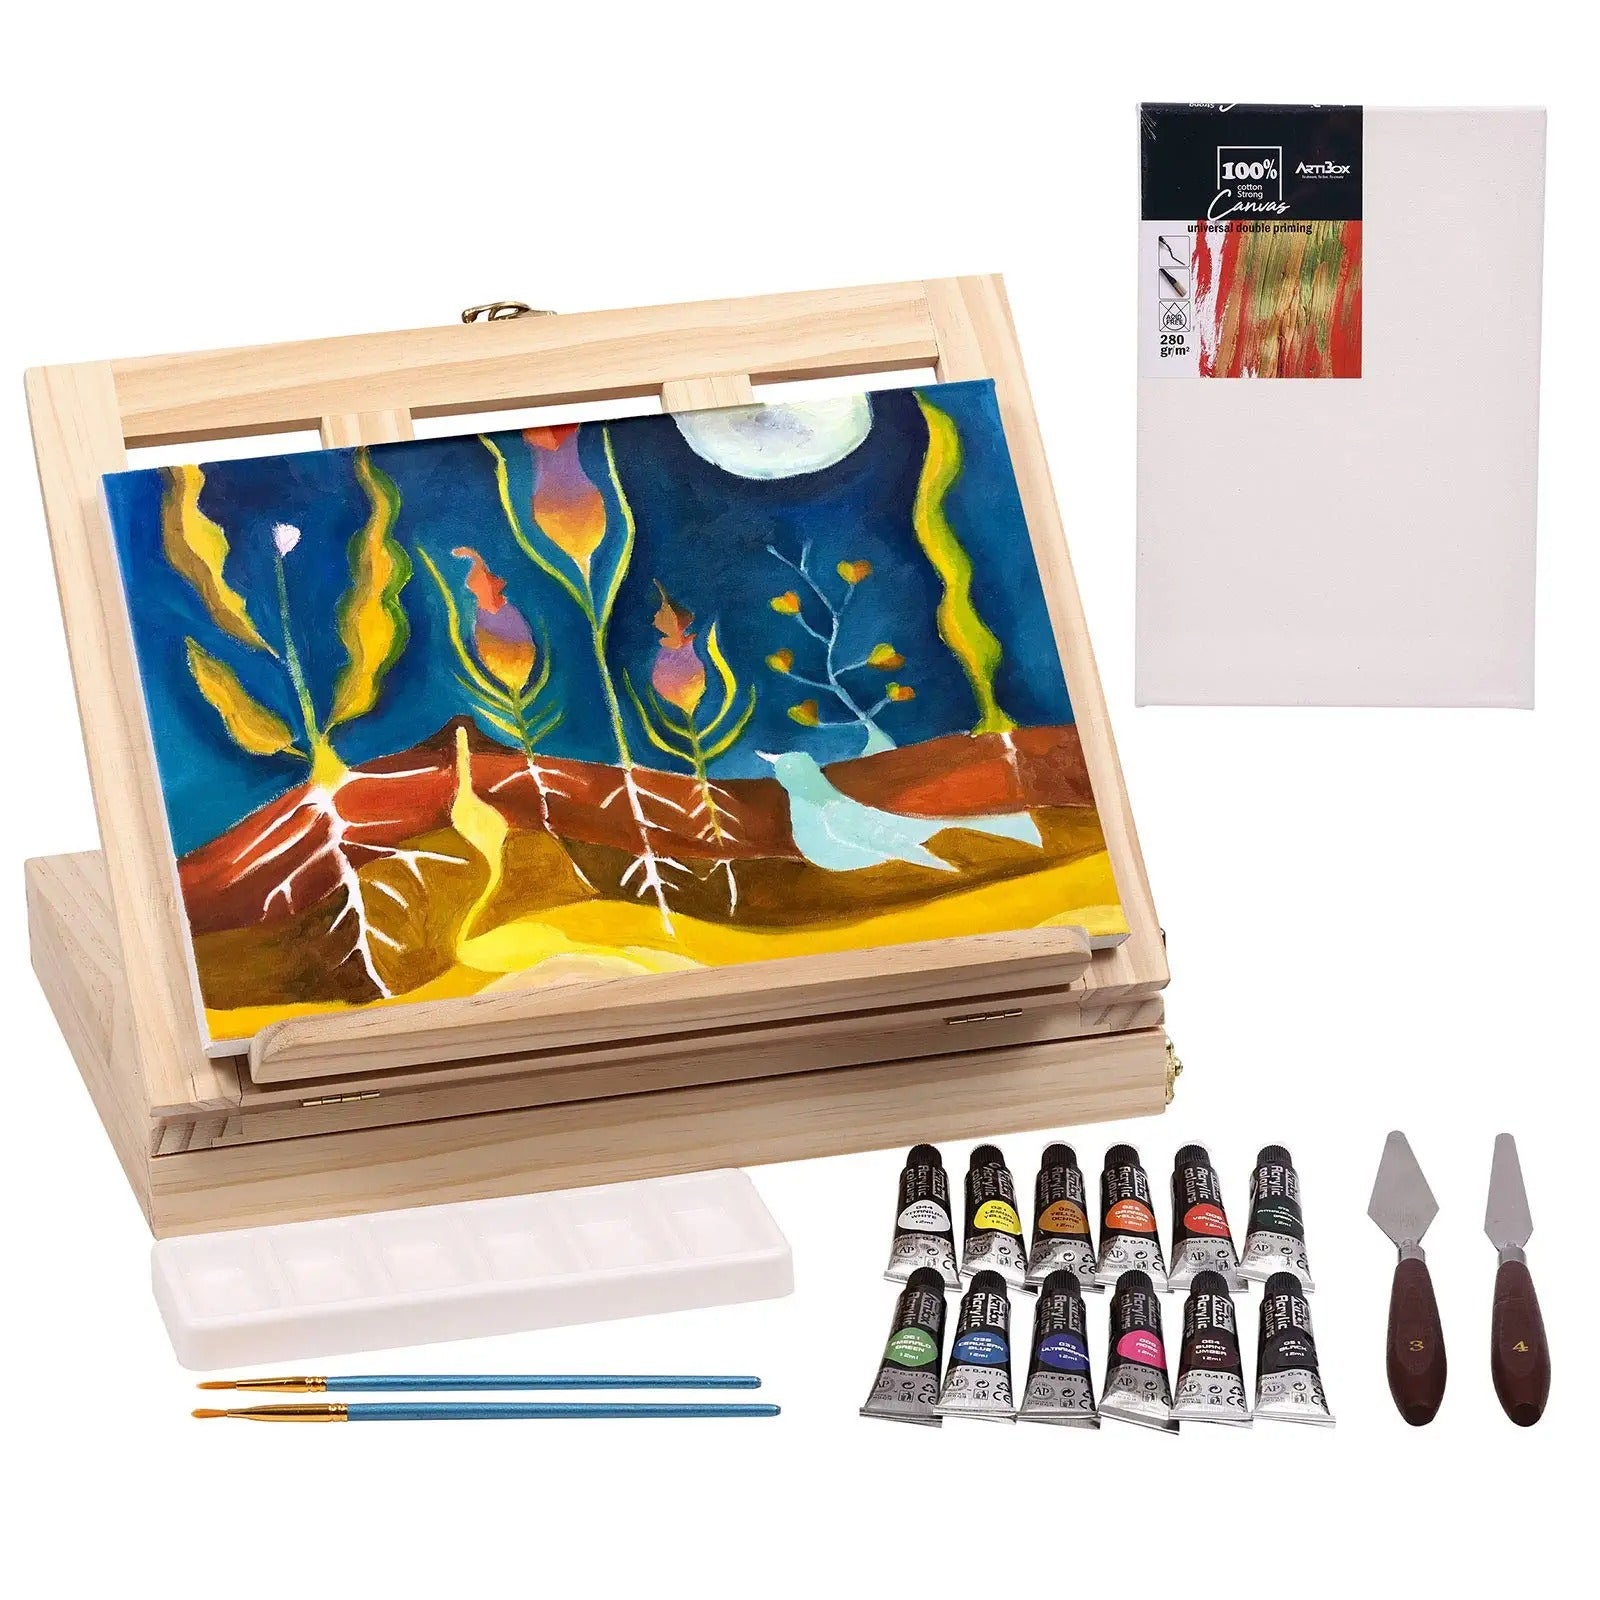 Adjustable Wood Desktop Easel with Drawer Painting Canvas Adult & Kids